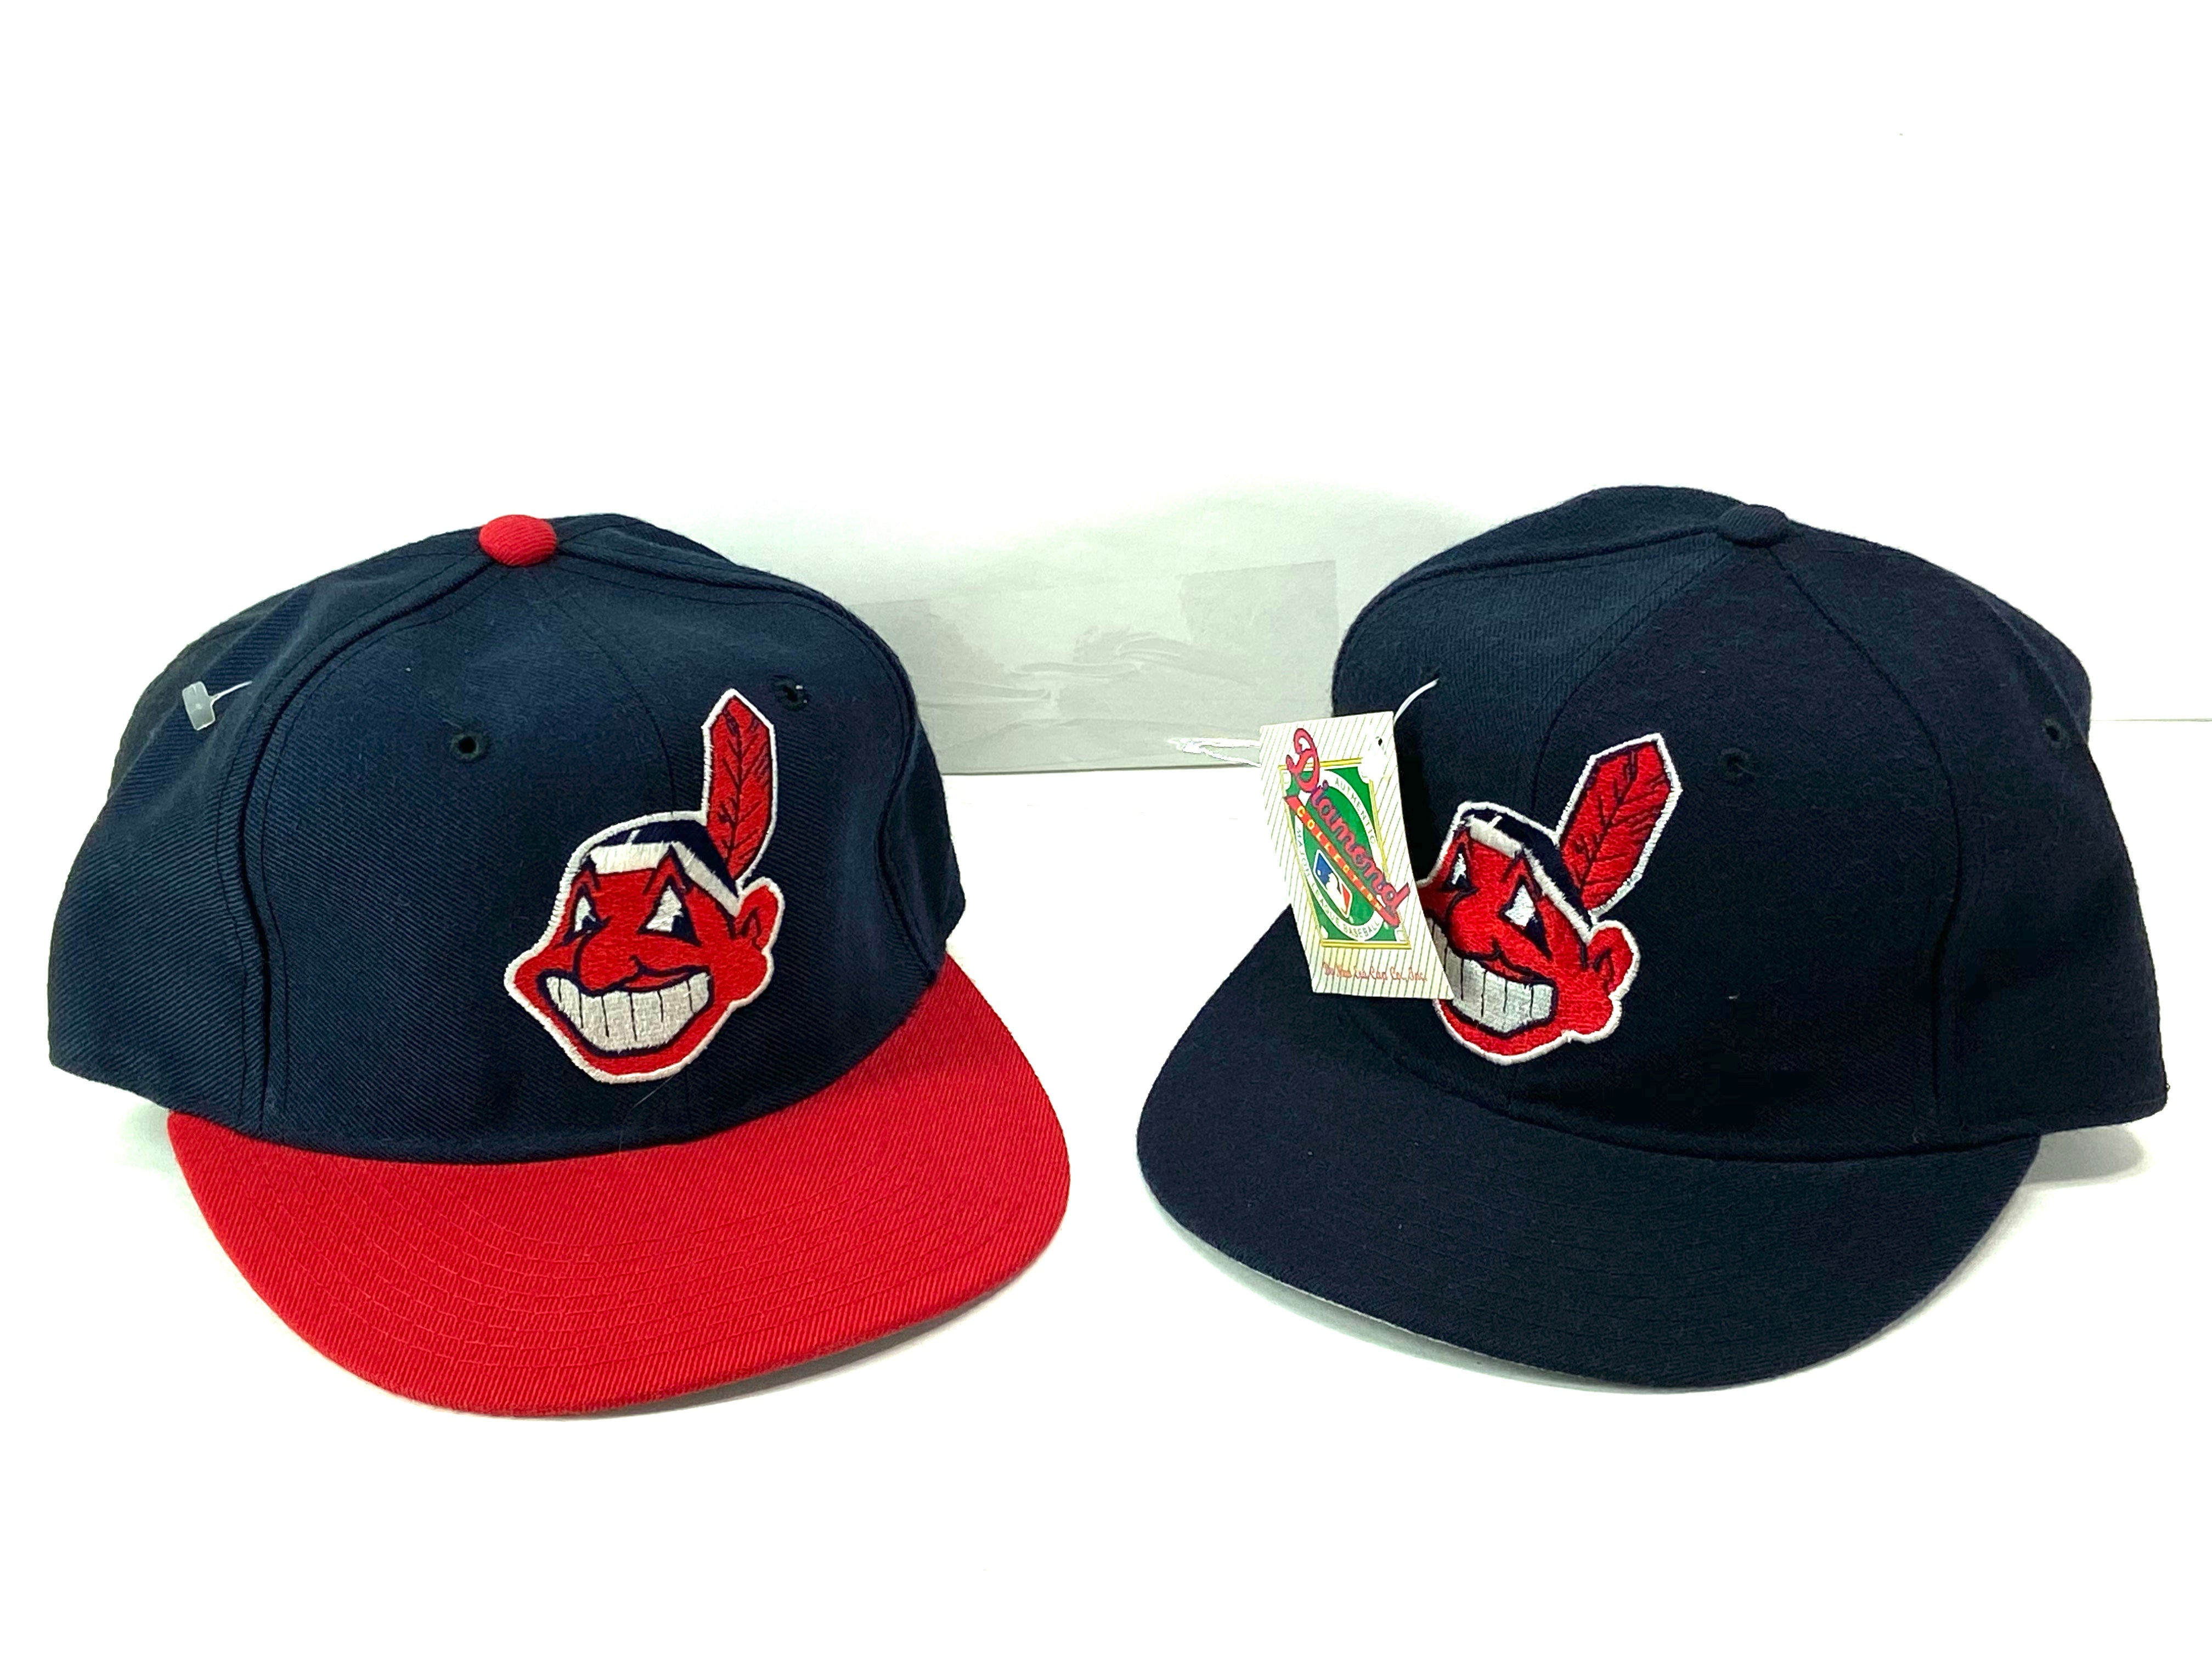 Cleveland Indians hat